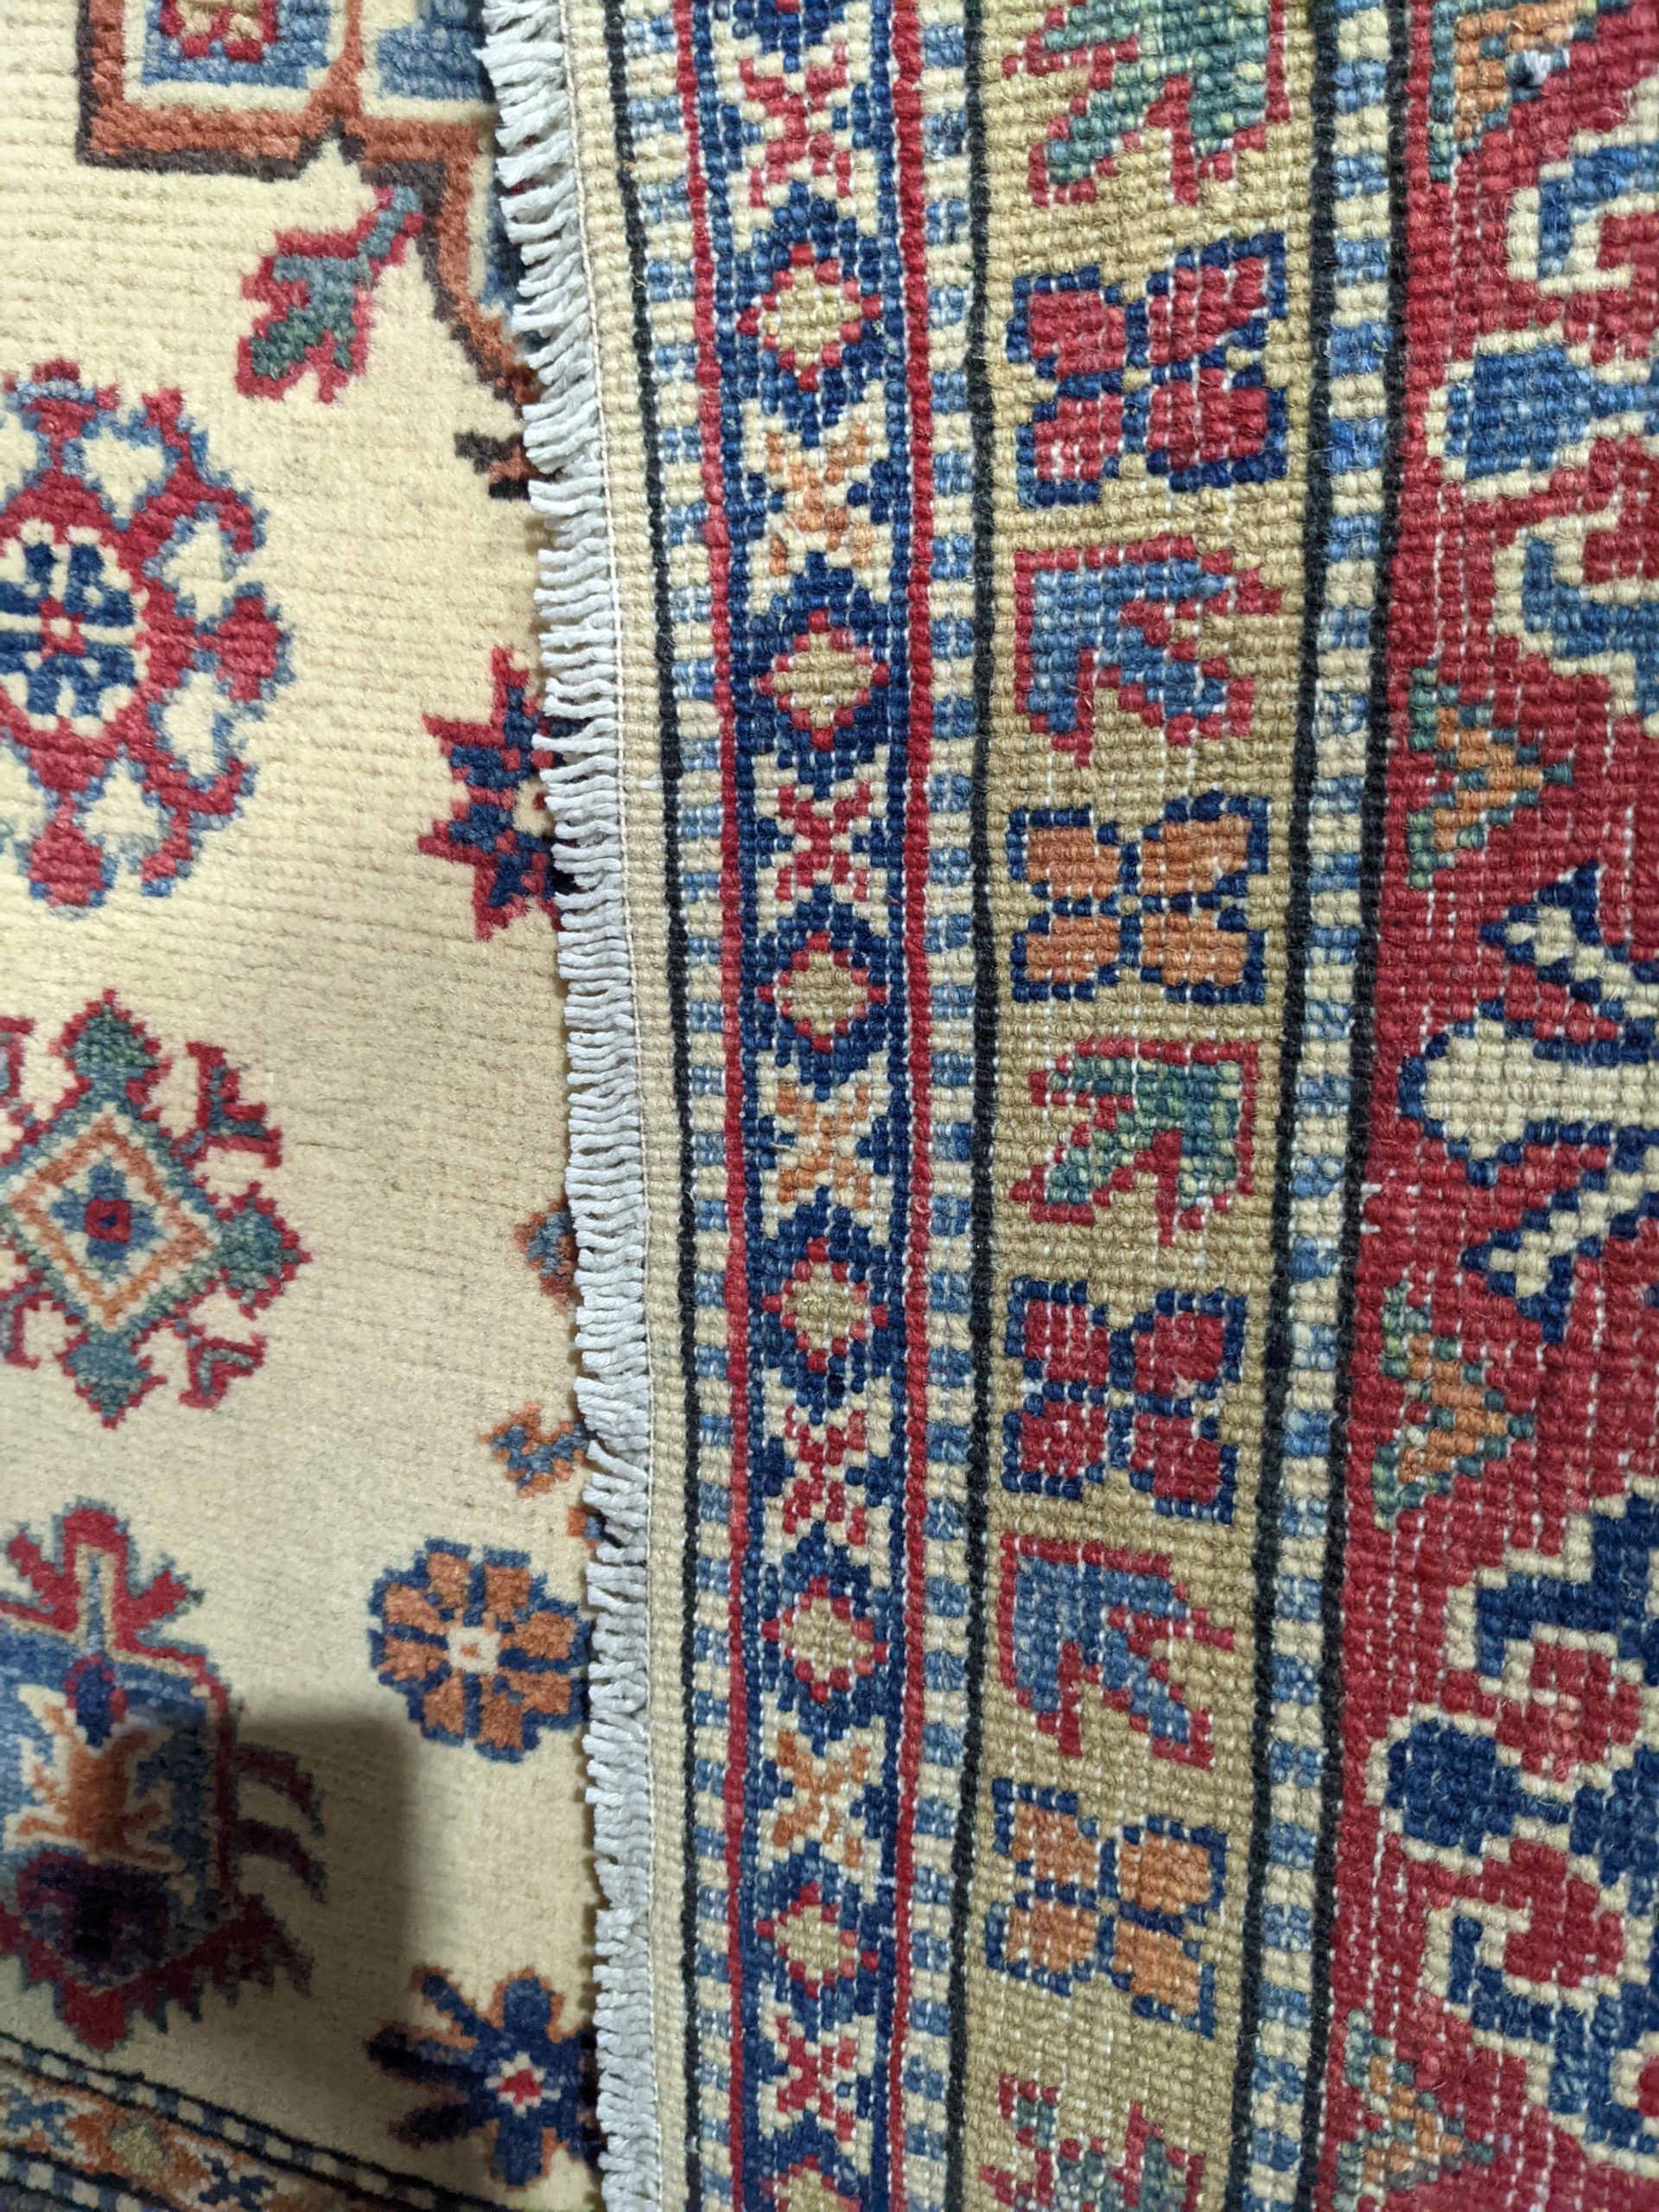 Kazak-Style Hand-Knotted Area Rug